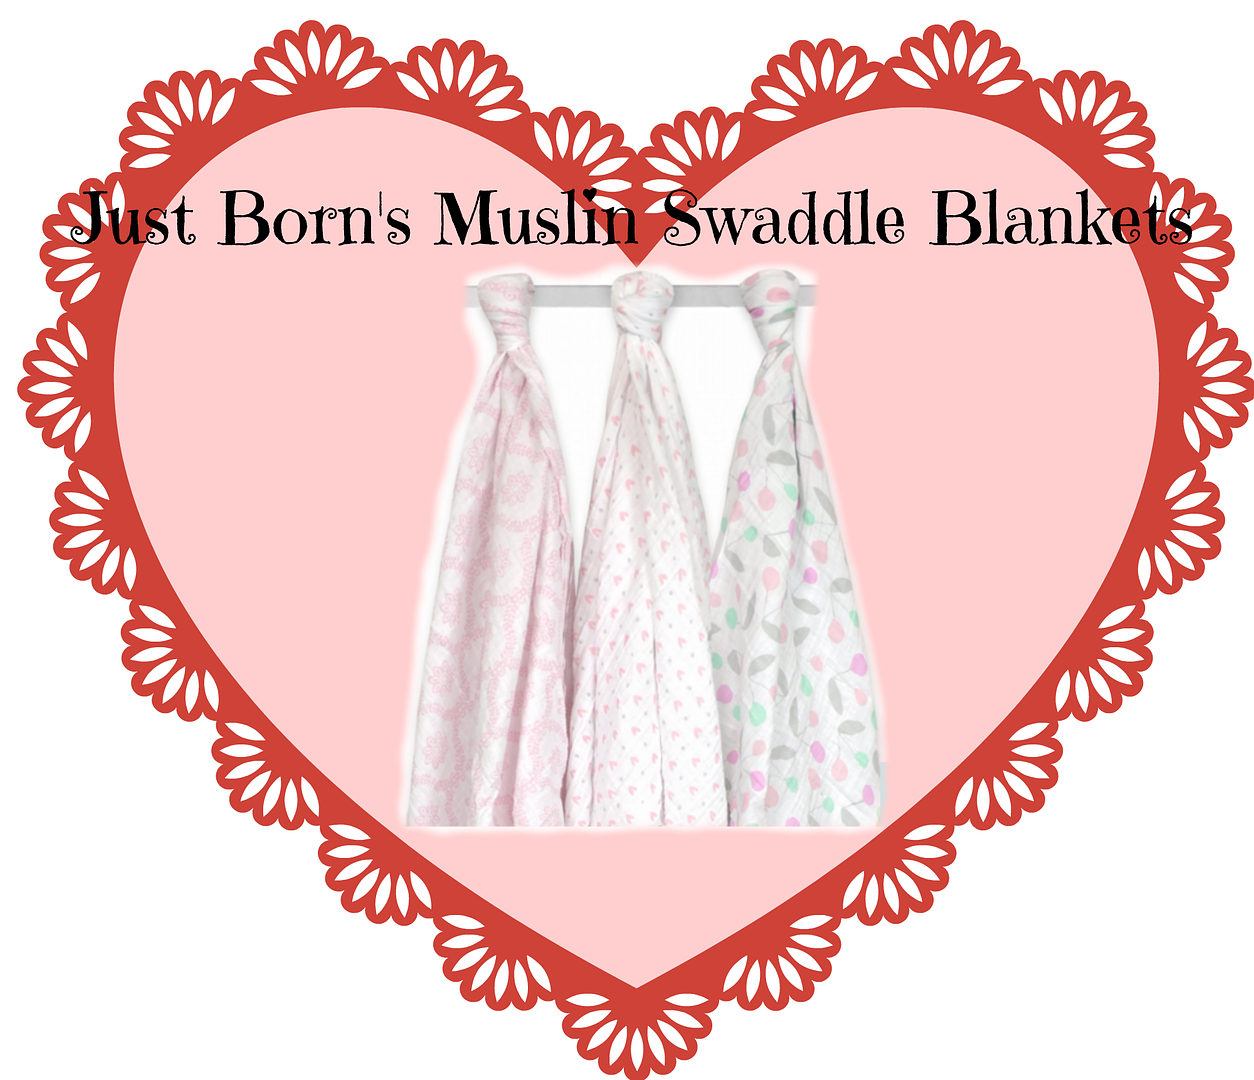 Just Born muslin swaddle blankets